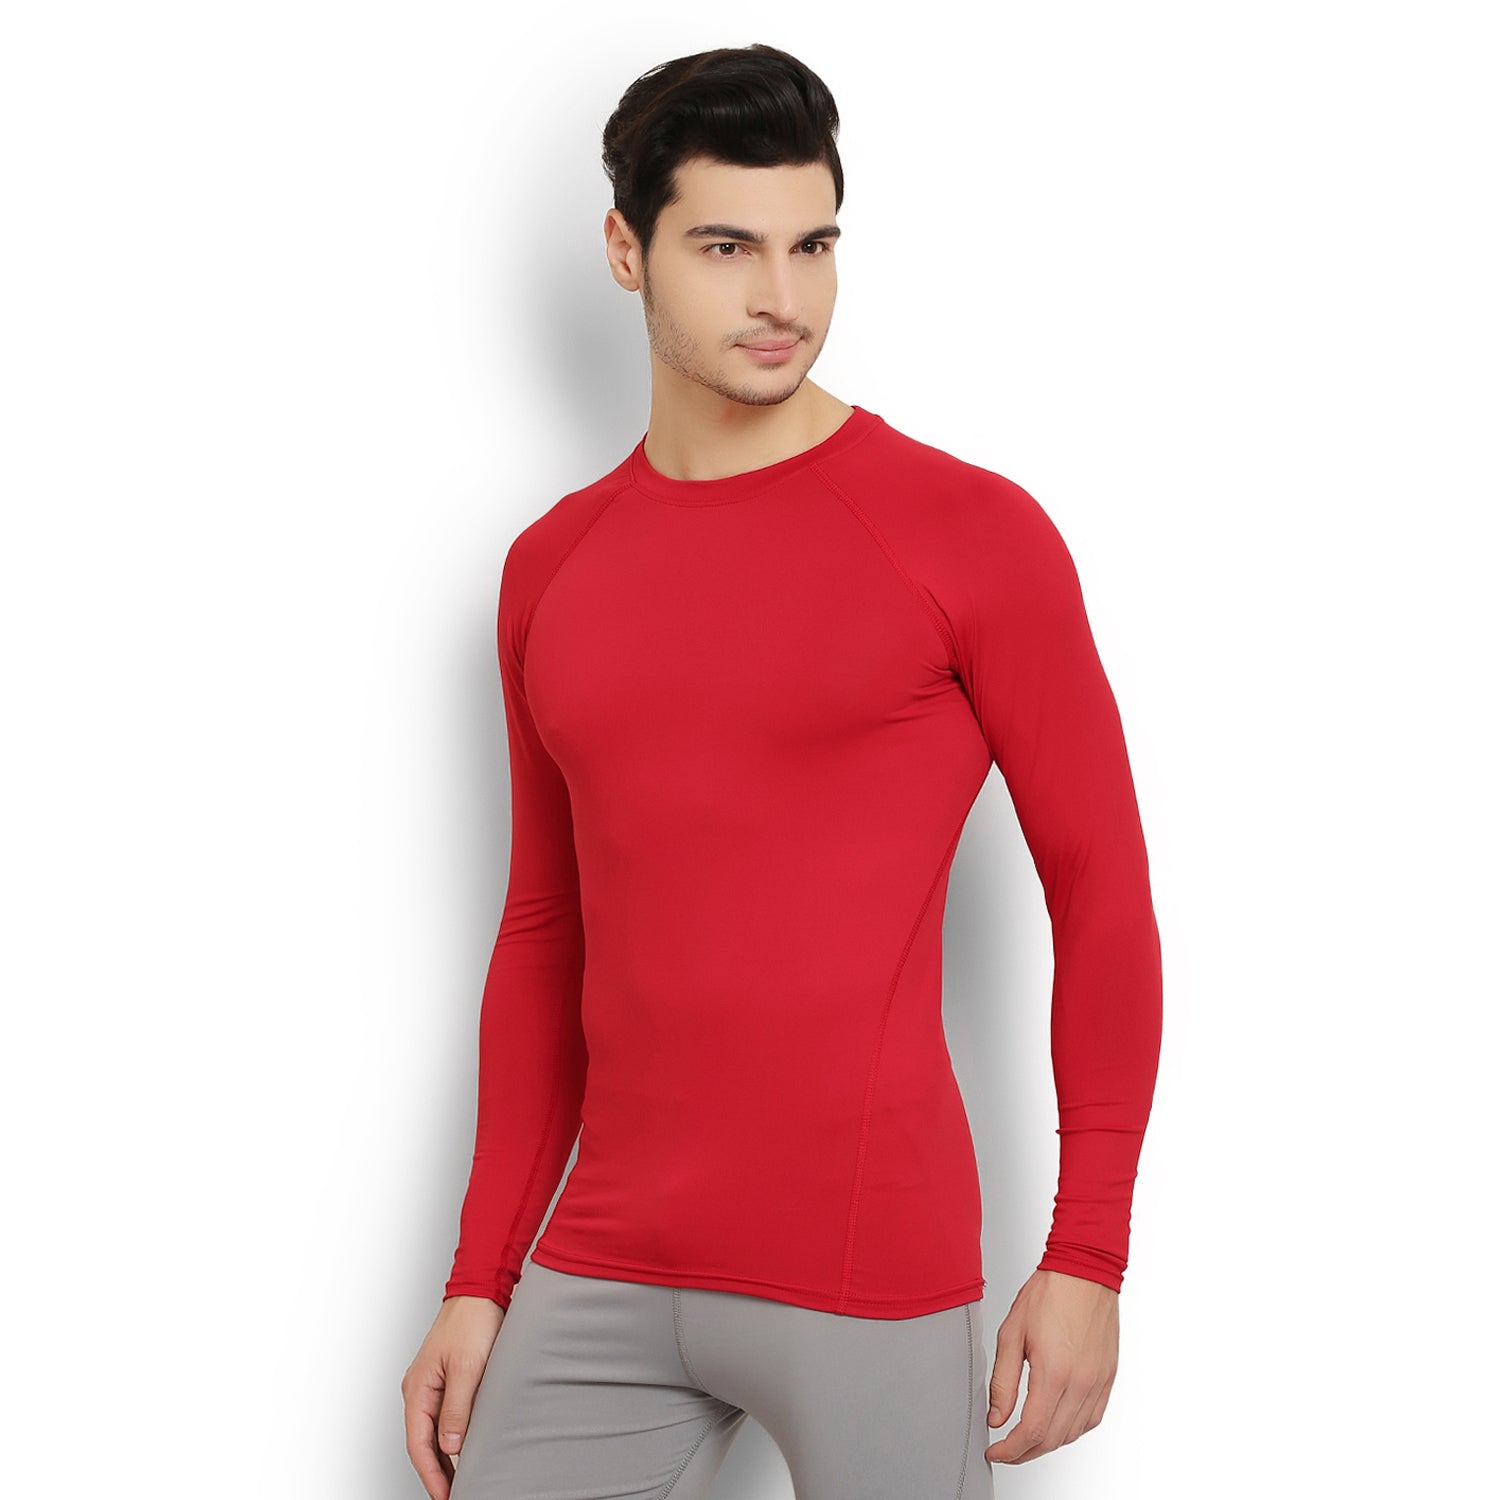 ARMR Unisex RED SKYN Full-Sleeve T-shirt